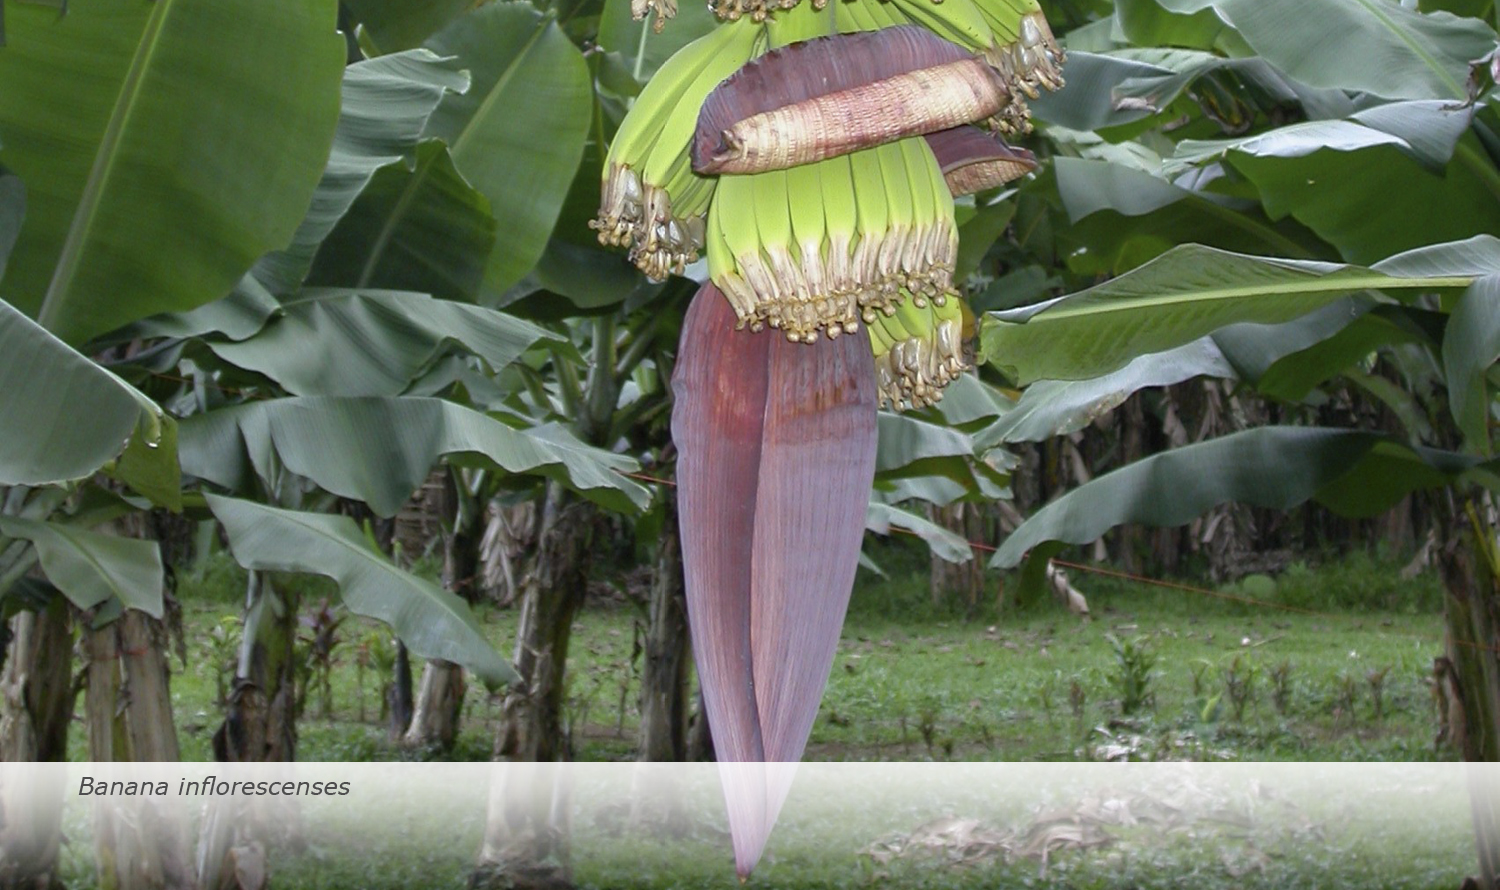 Info & Facts: Banana inflorescenses